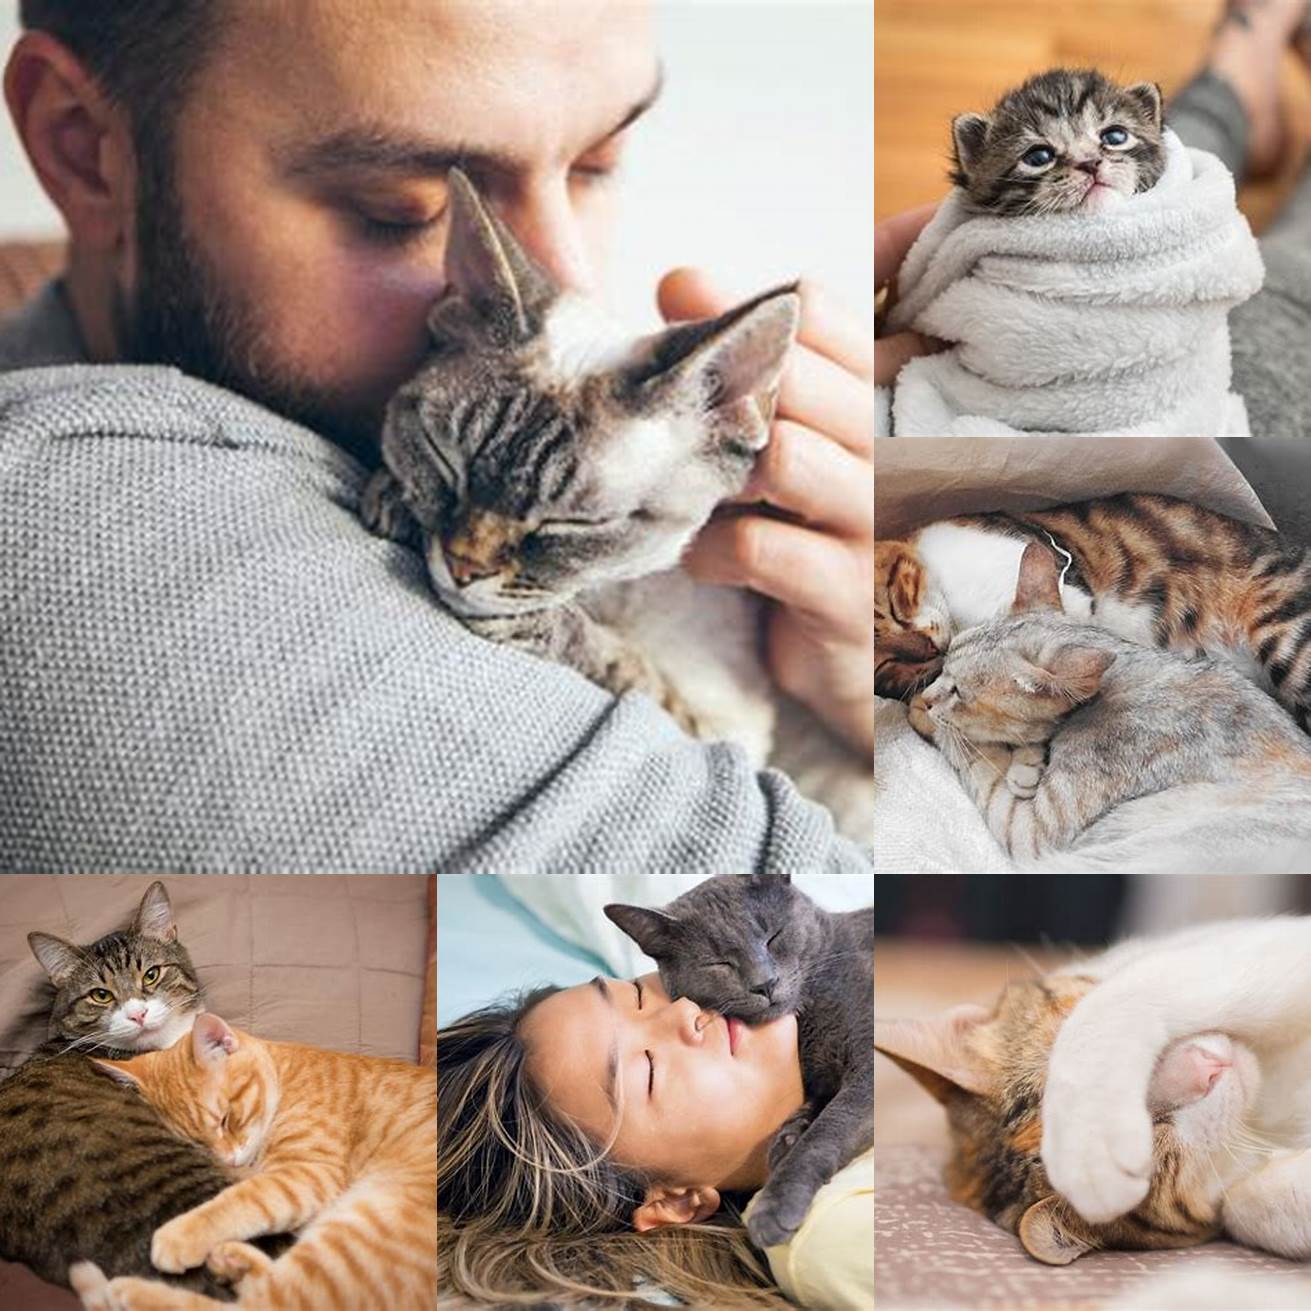 Comfort your cat